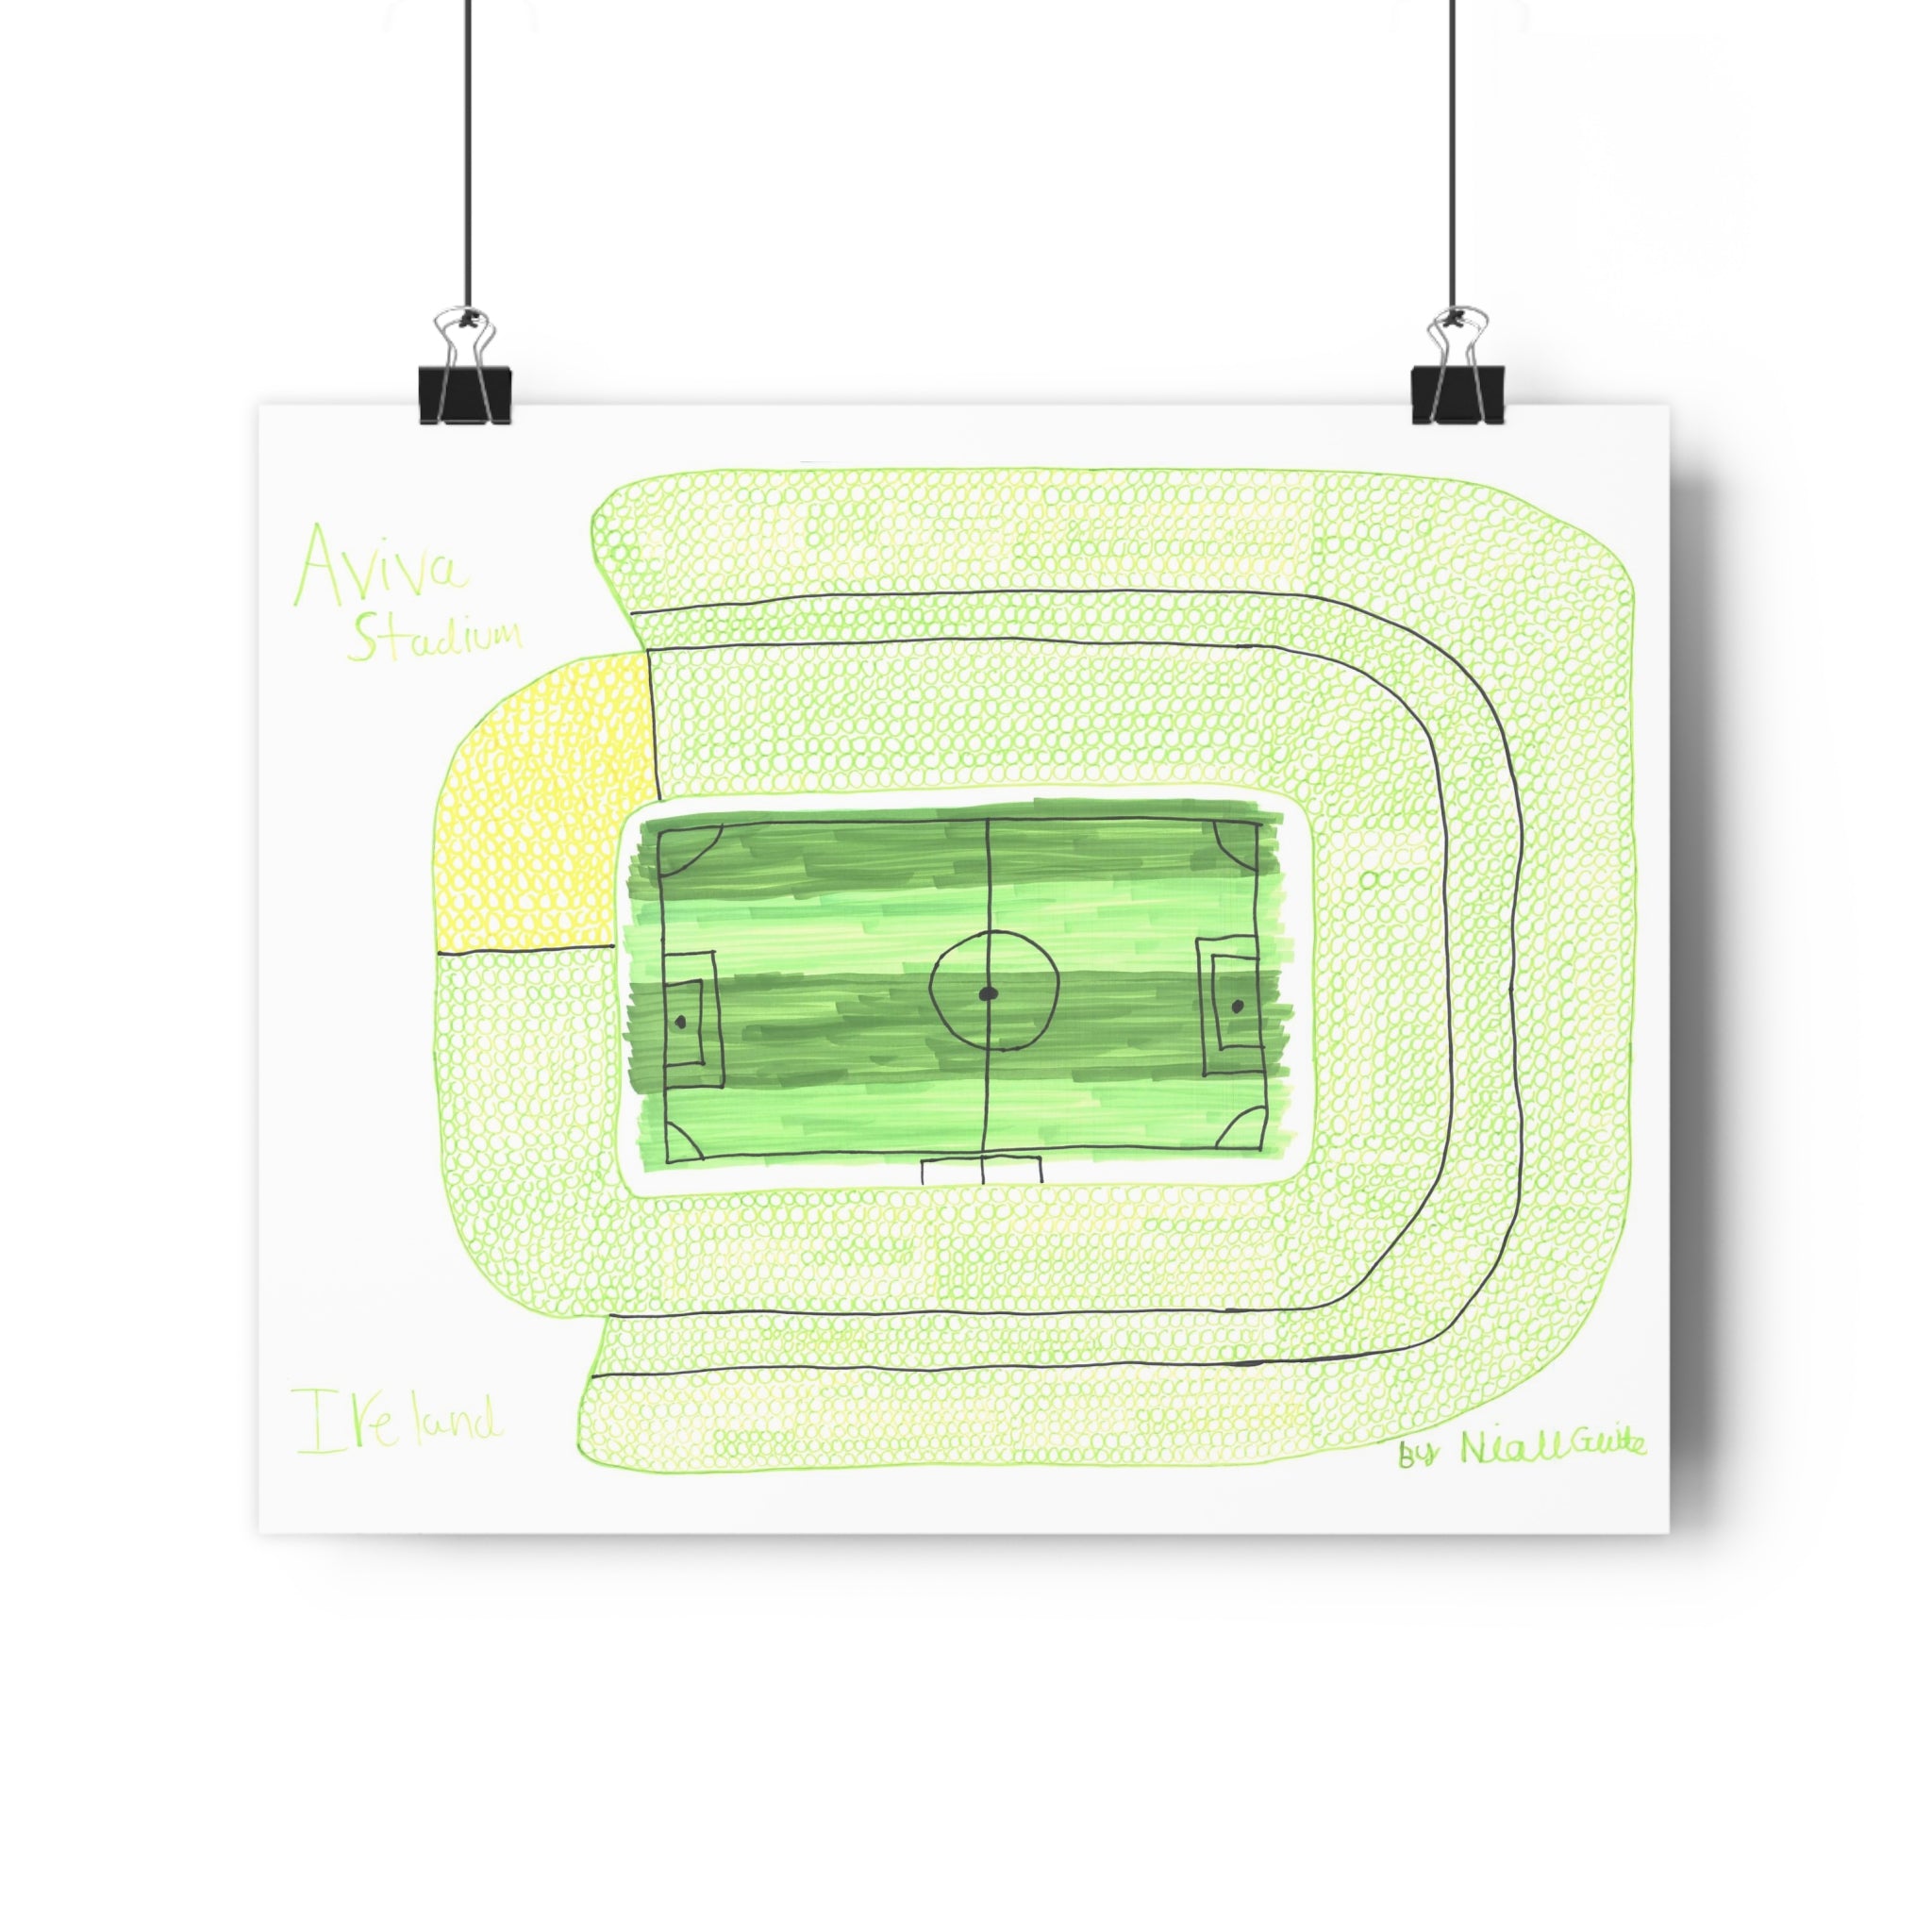 Ireland - Aviva Stadium - Print